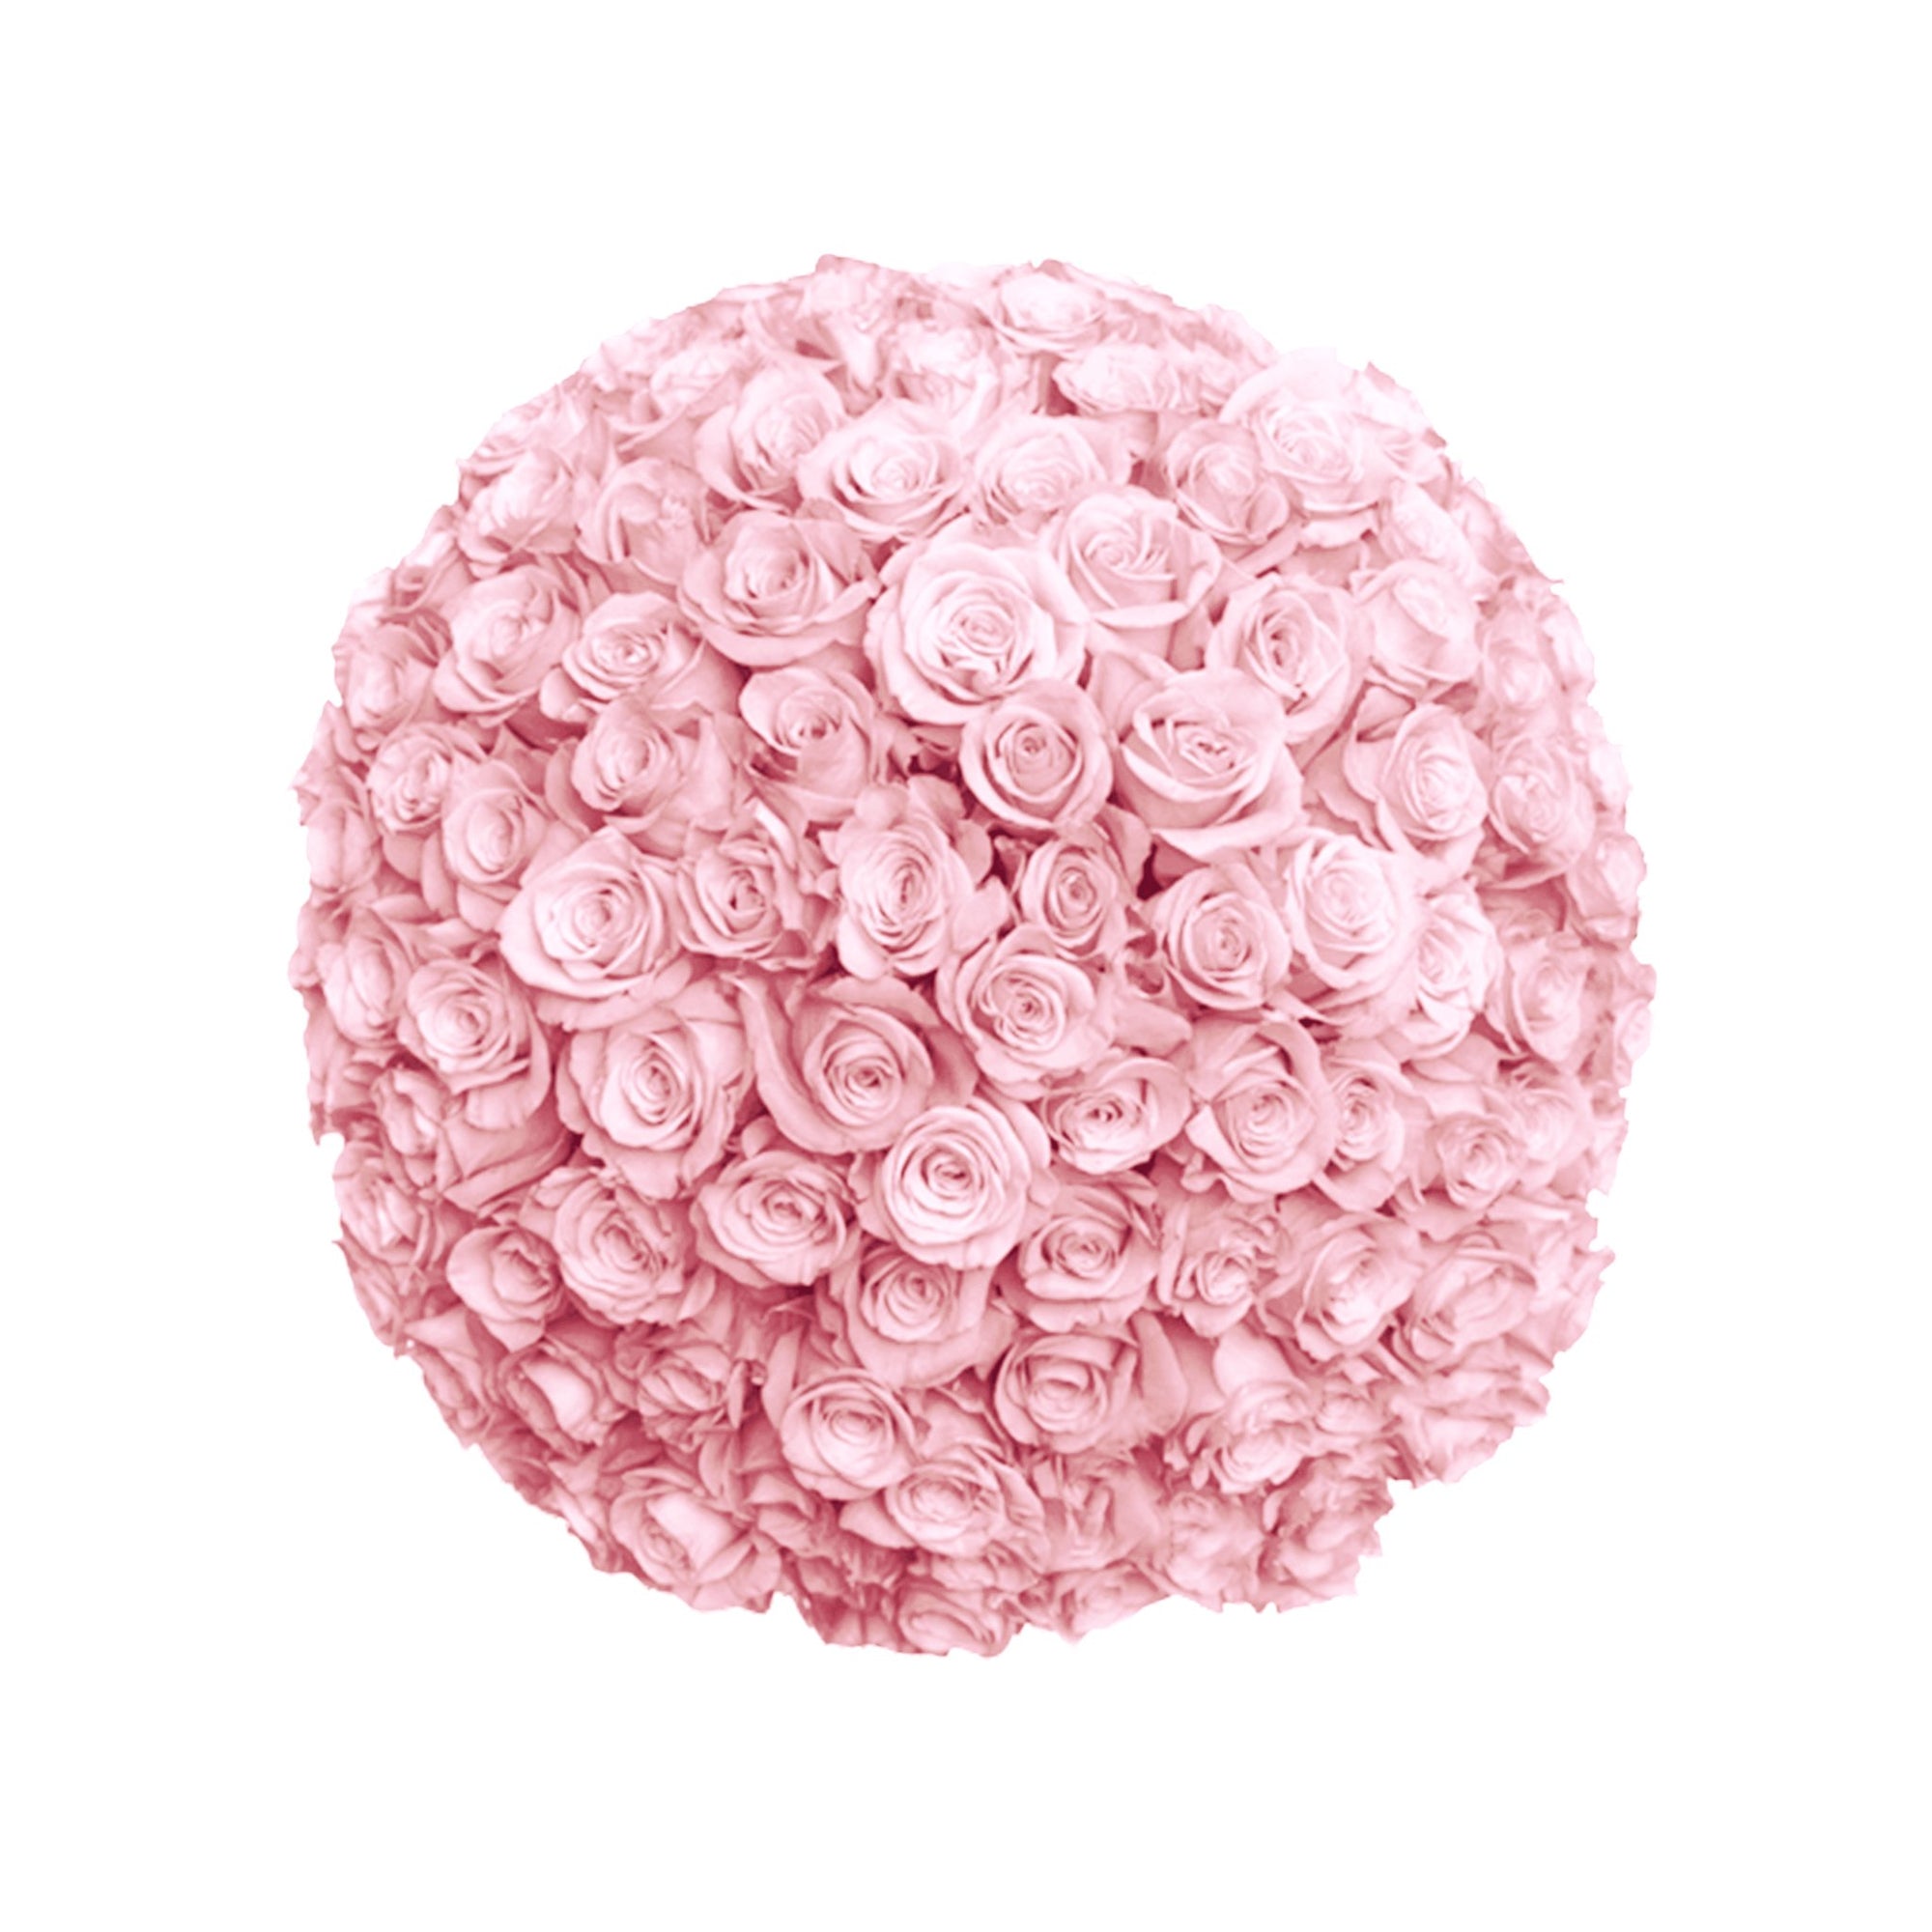 Fresh Roses in a Crystal Vase | Light Pink - 1 Dozen - Roses